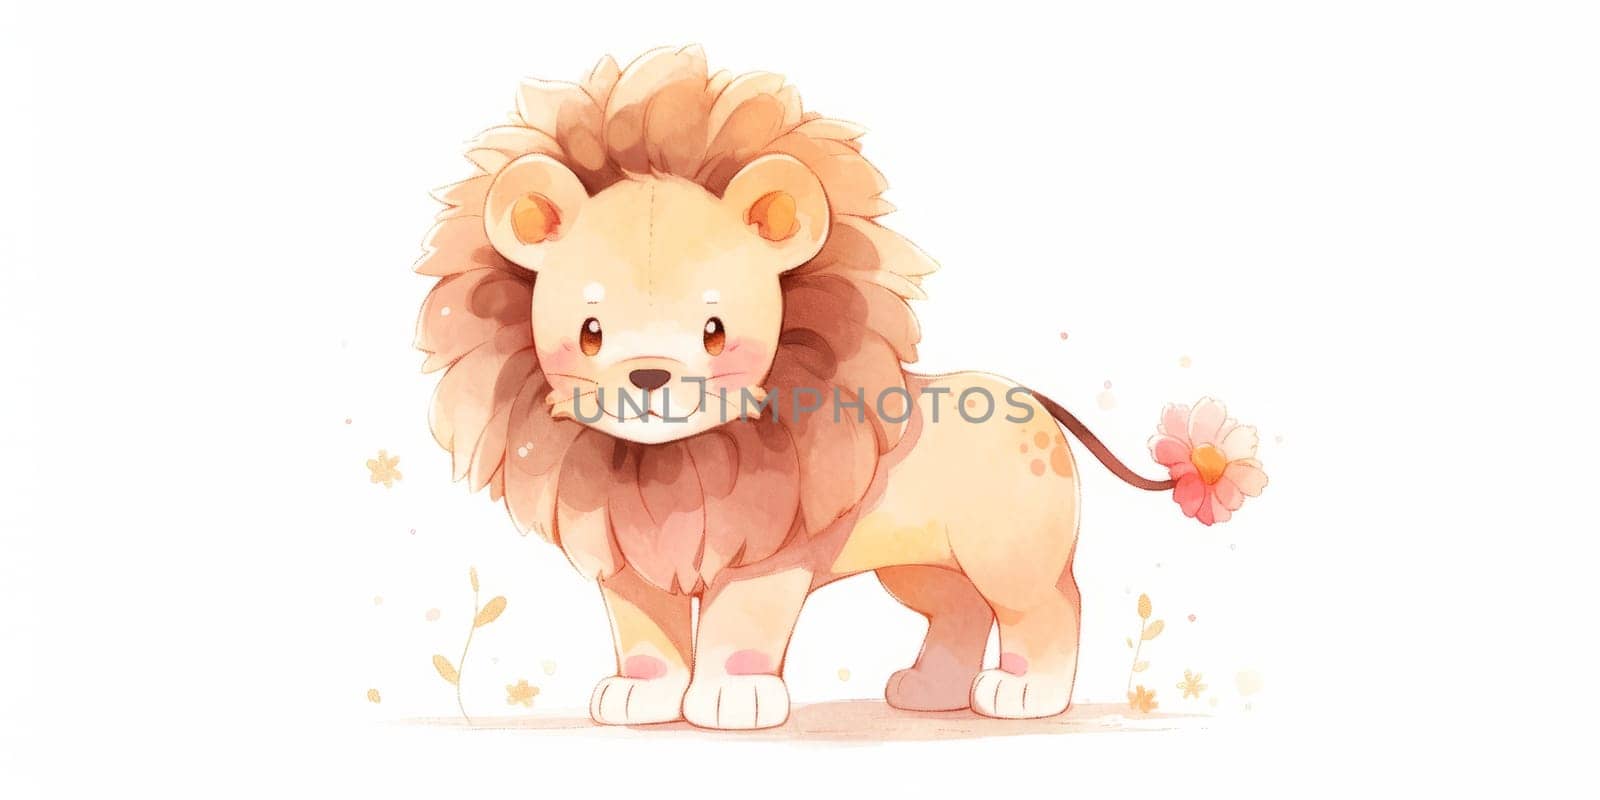 Cute kawaii baby lion hand drawn watercolor illustration. by Artsiom